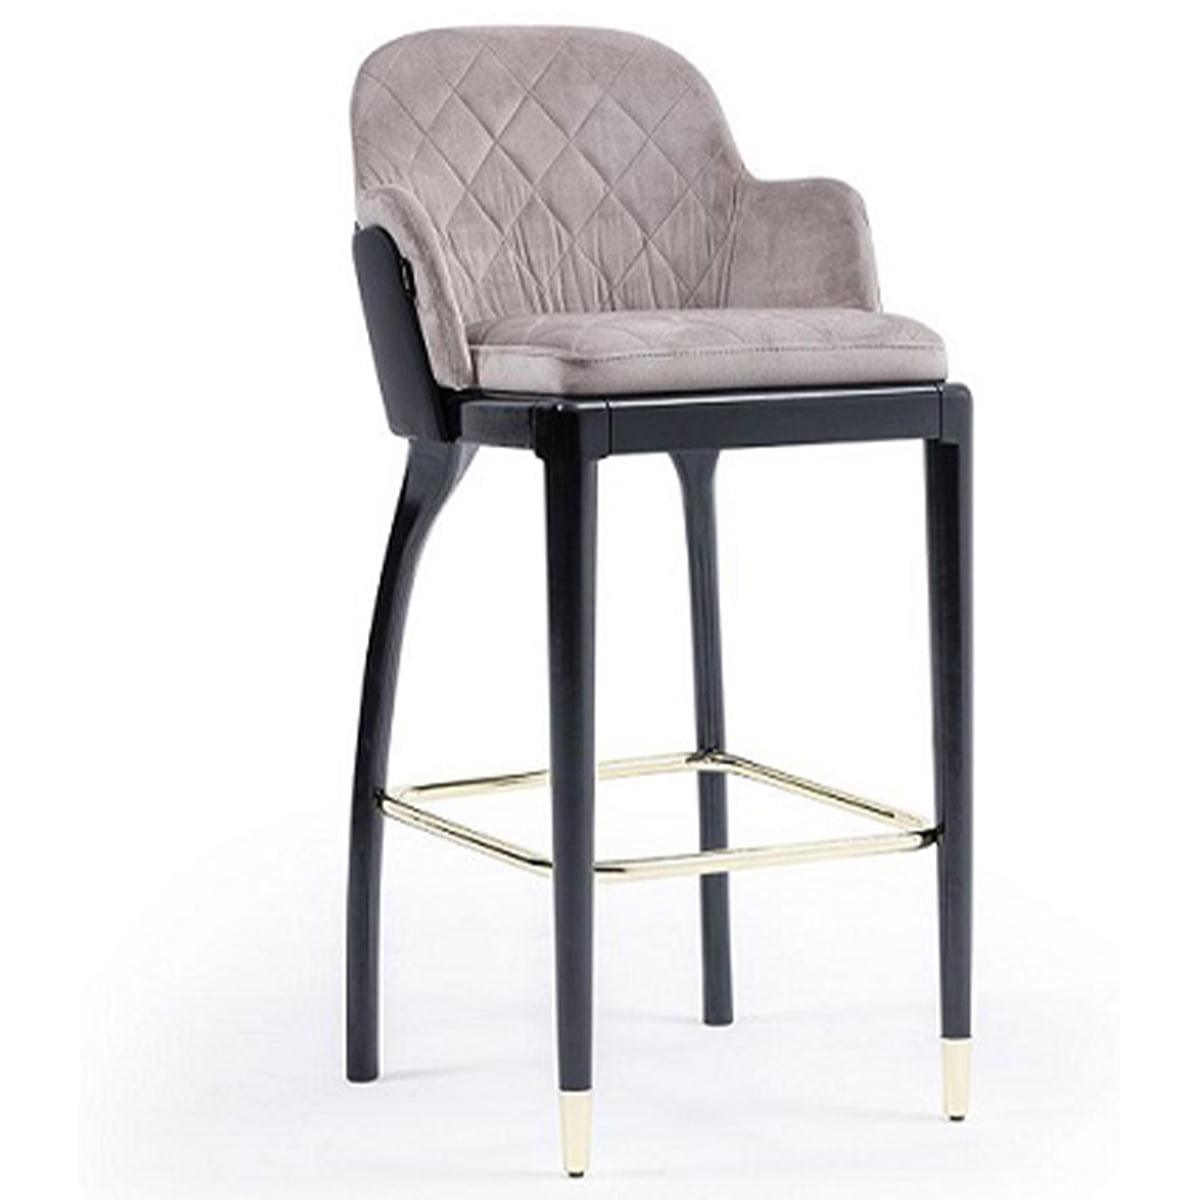 Designer Arper Italian Polycarbonate White/Black Stacking Bistro Chair Cafe 